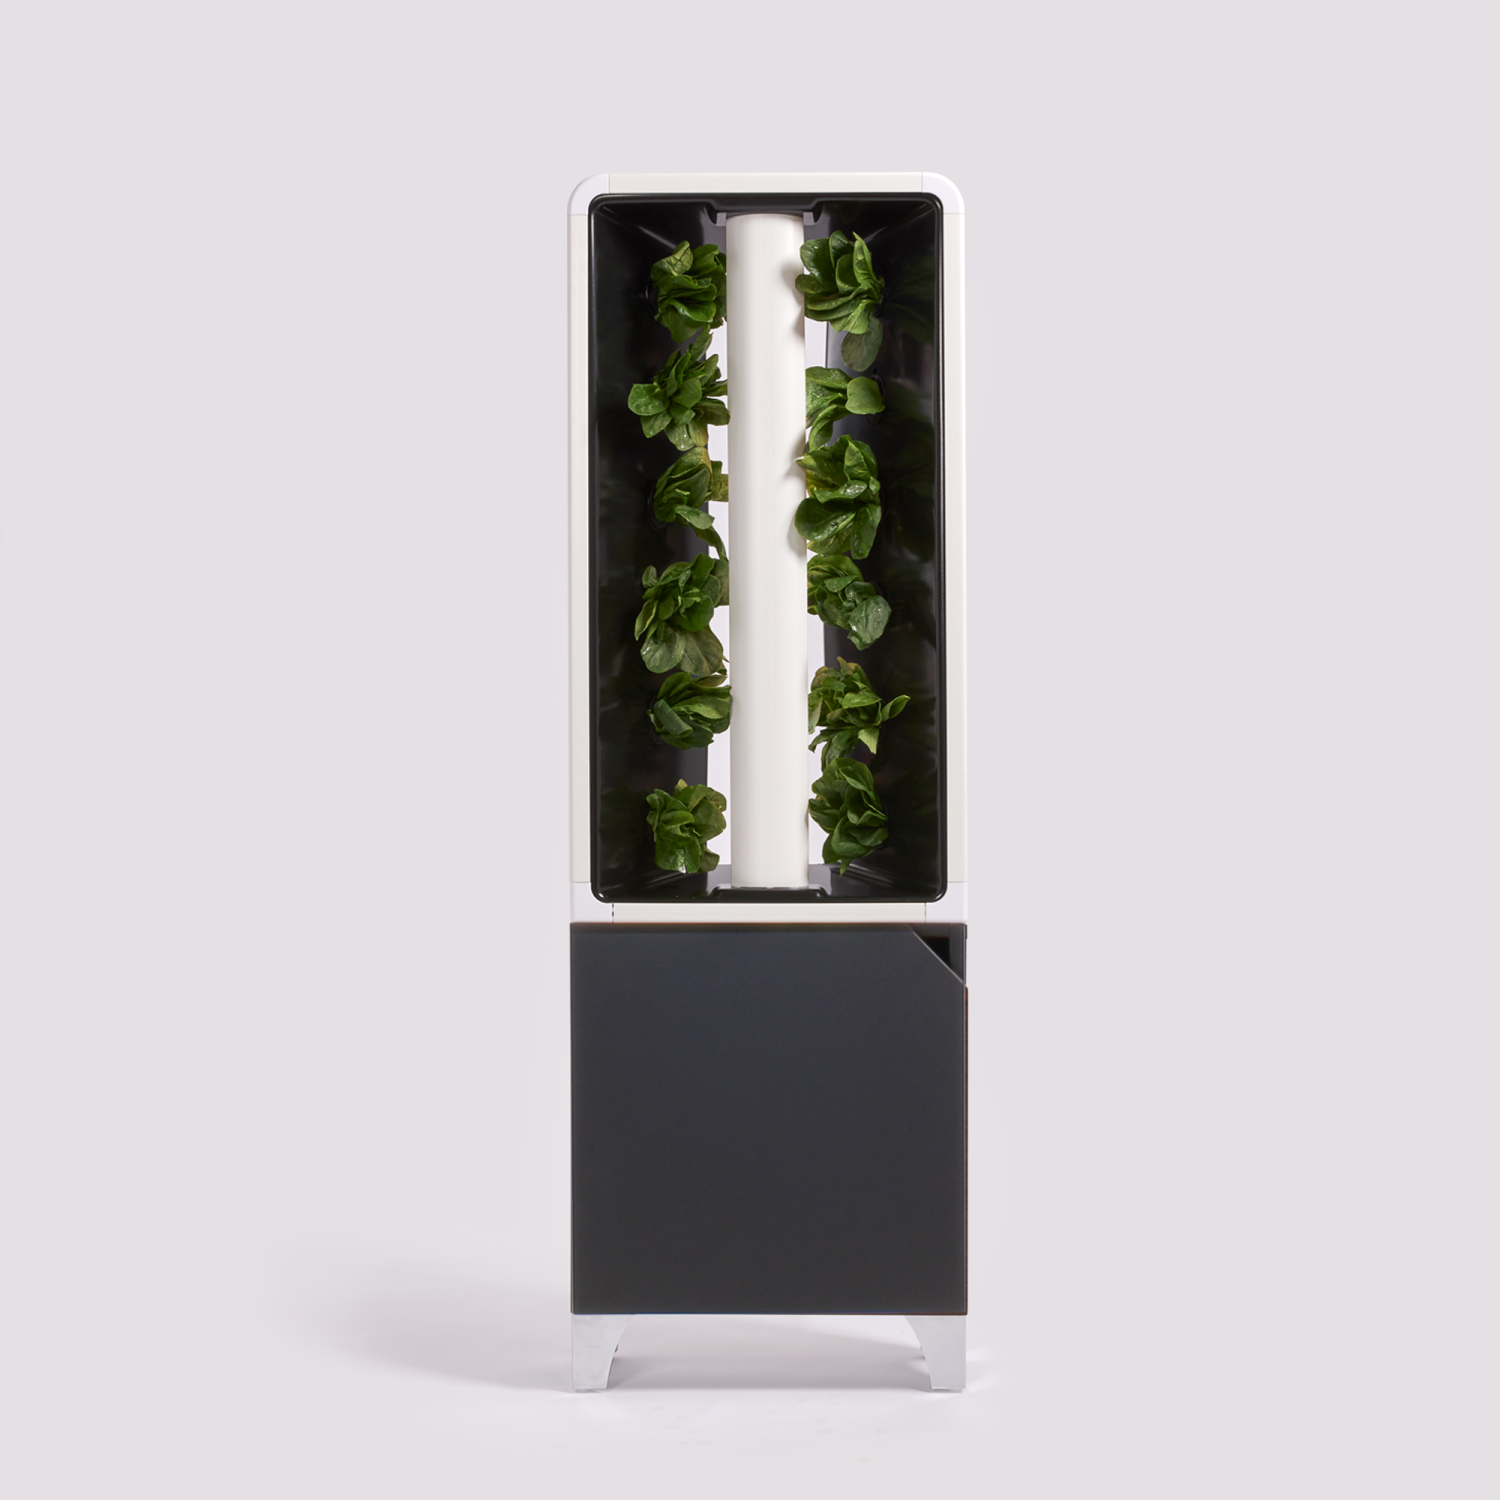 Just Vertical - The Automated EVE Indoor Smart Garden